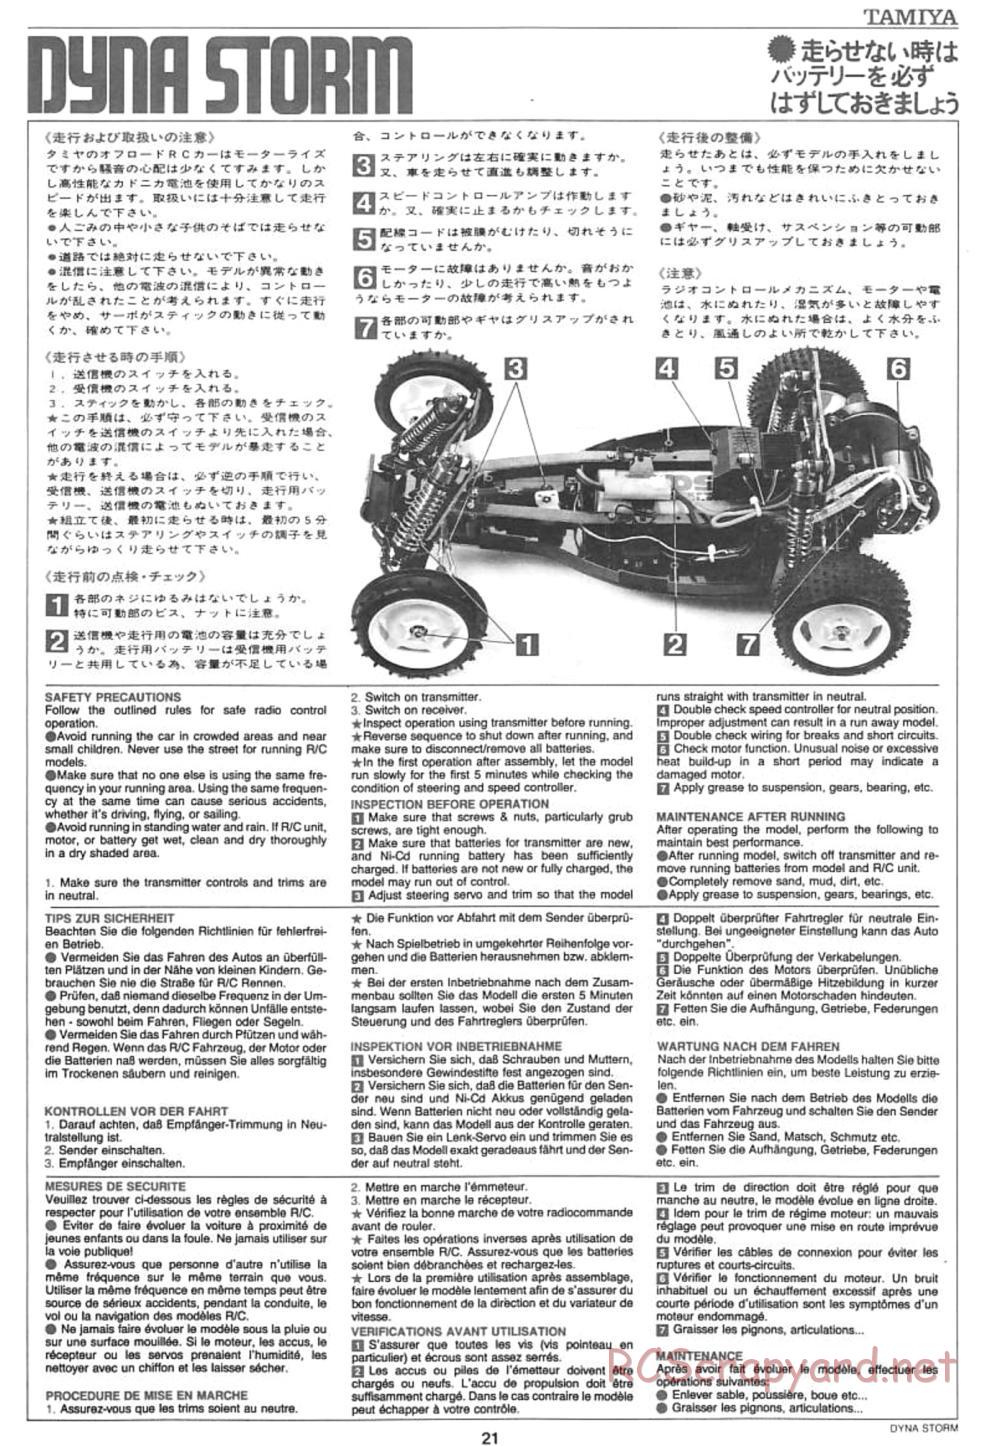 Tamiya - Dyna Storm Chassis - Manual - Page 21